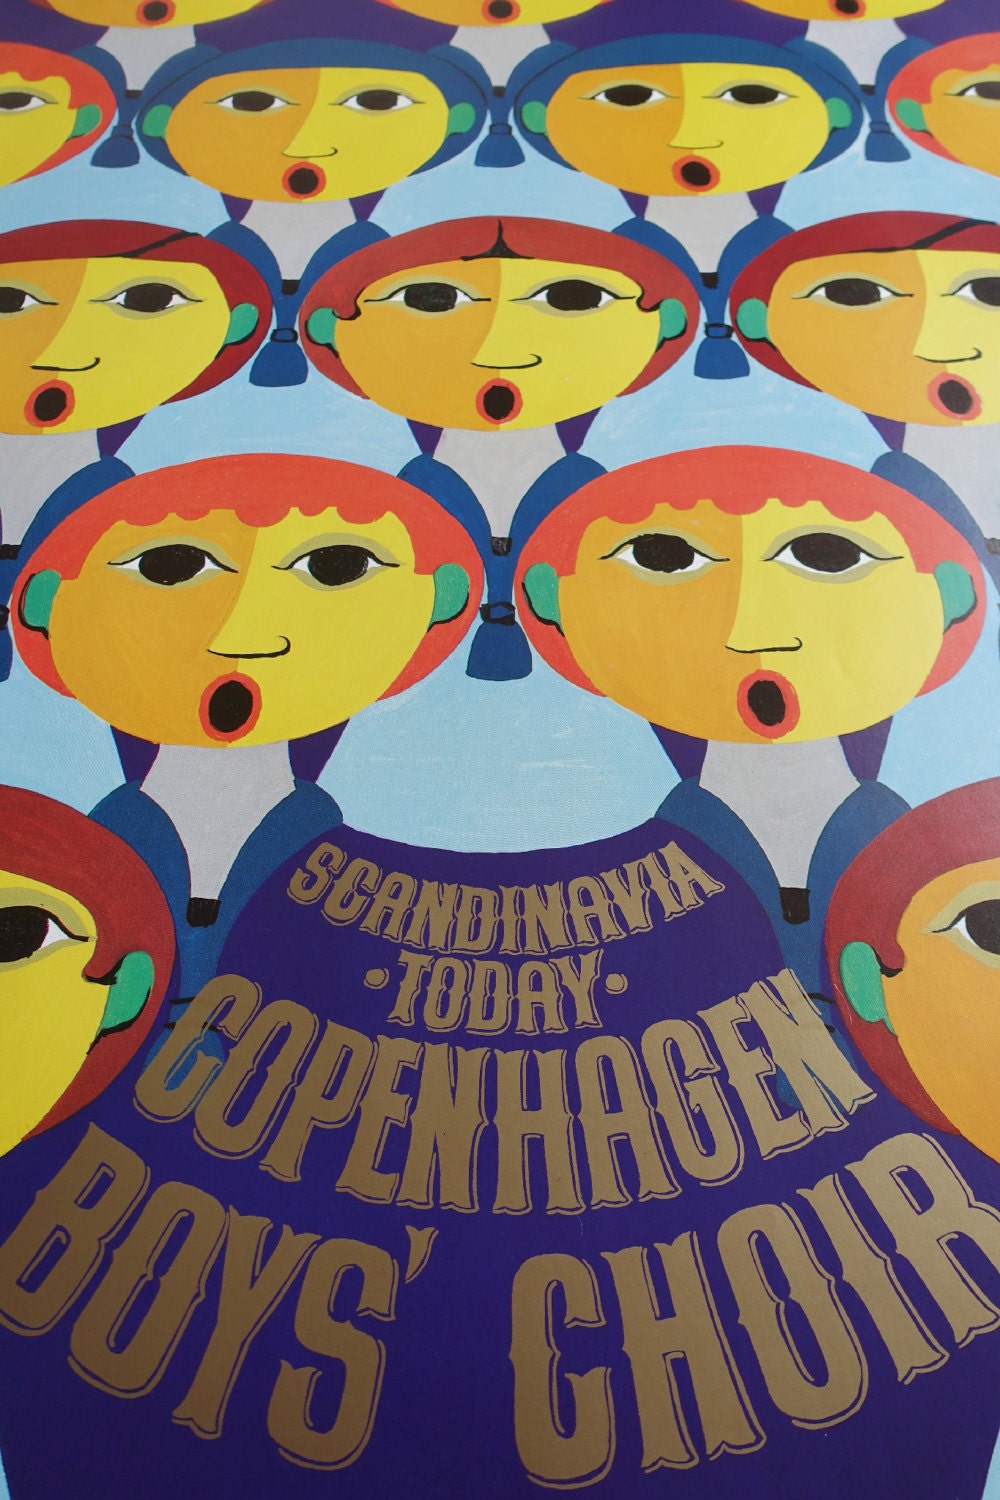 1983 Wiinblad Copenhagen Boys' Choir - Original Vintage Poster